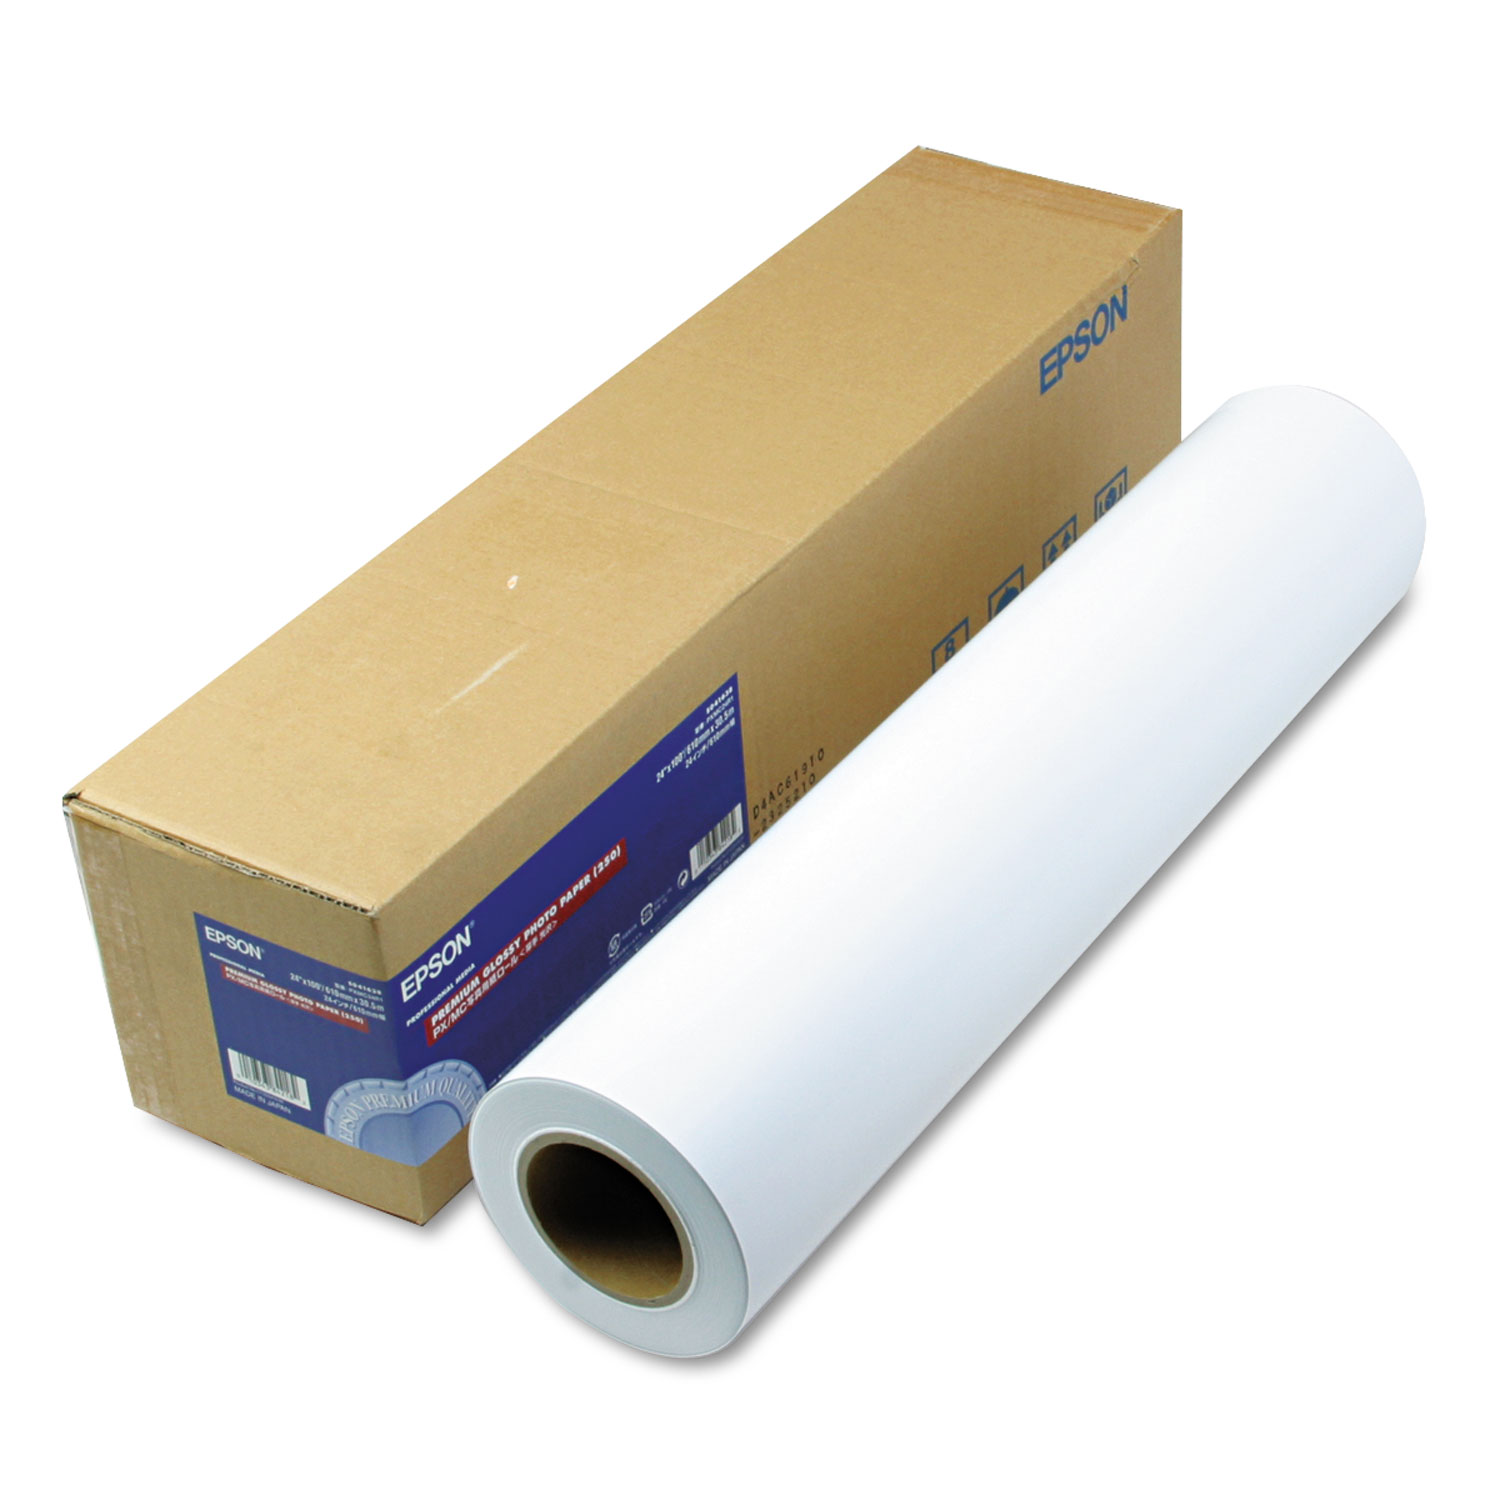  Epson S041638 Premium Glossy Photo Paper Roll, 3 Core, 10 mil, 24 x 100 ft, Glossy White (EPSS041638) 